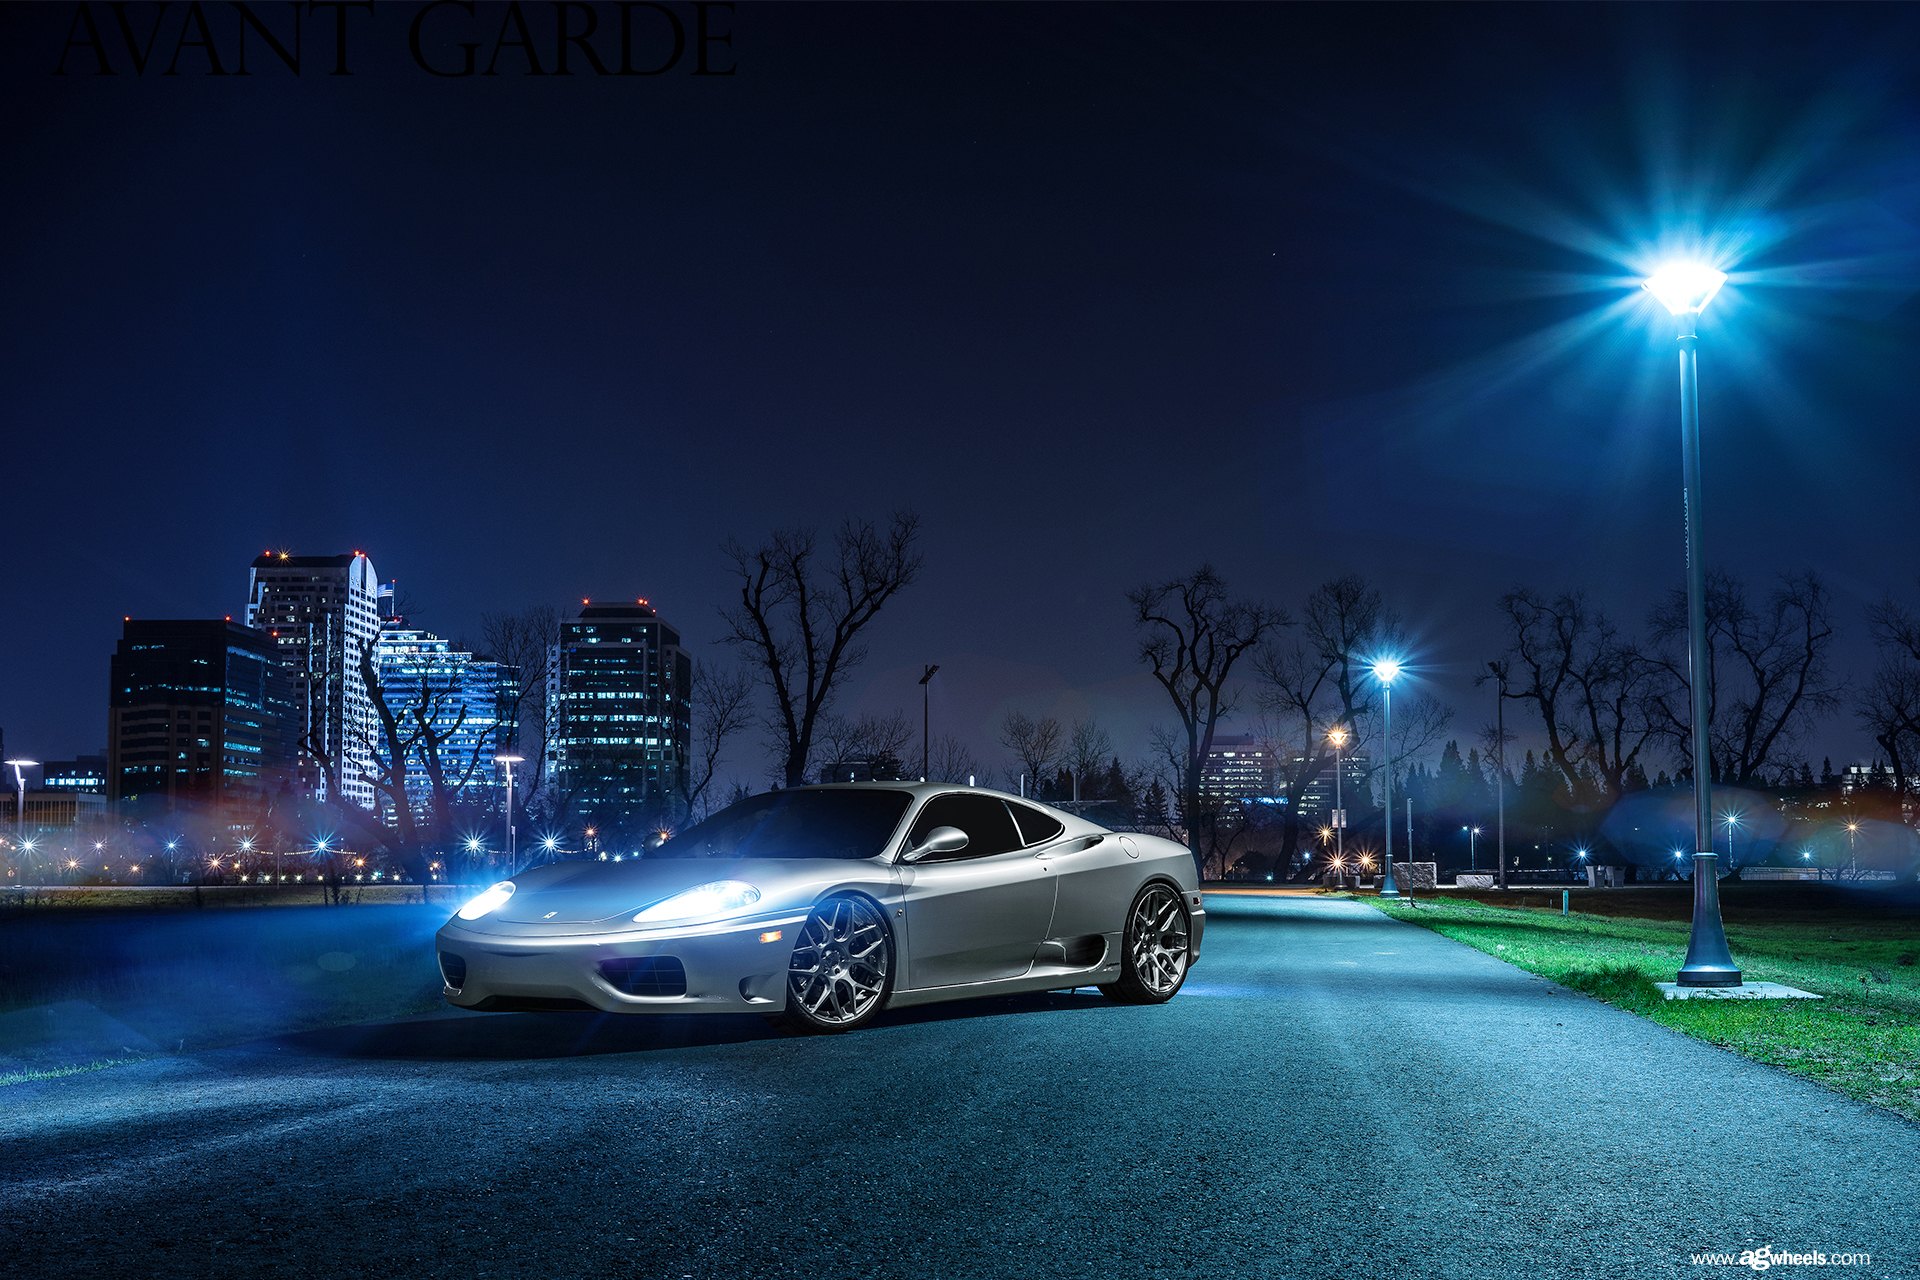 Aftermarket LED Headlights on Silver Ferrari 360 - Photo by Avant Garde Wheels